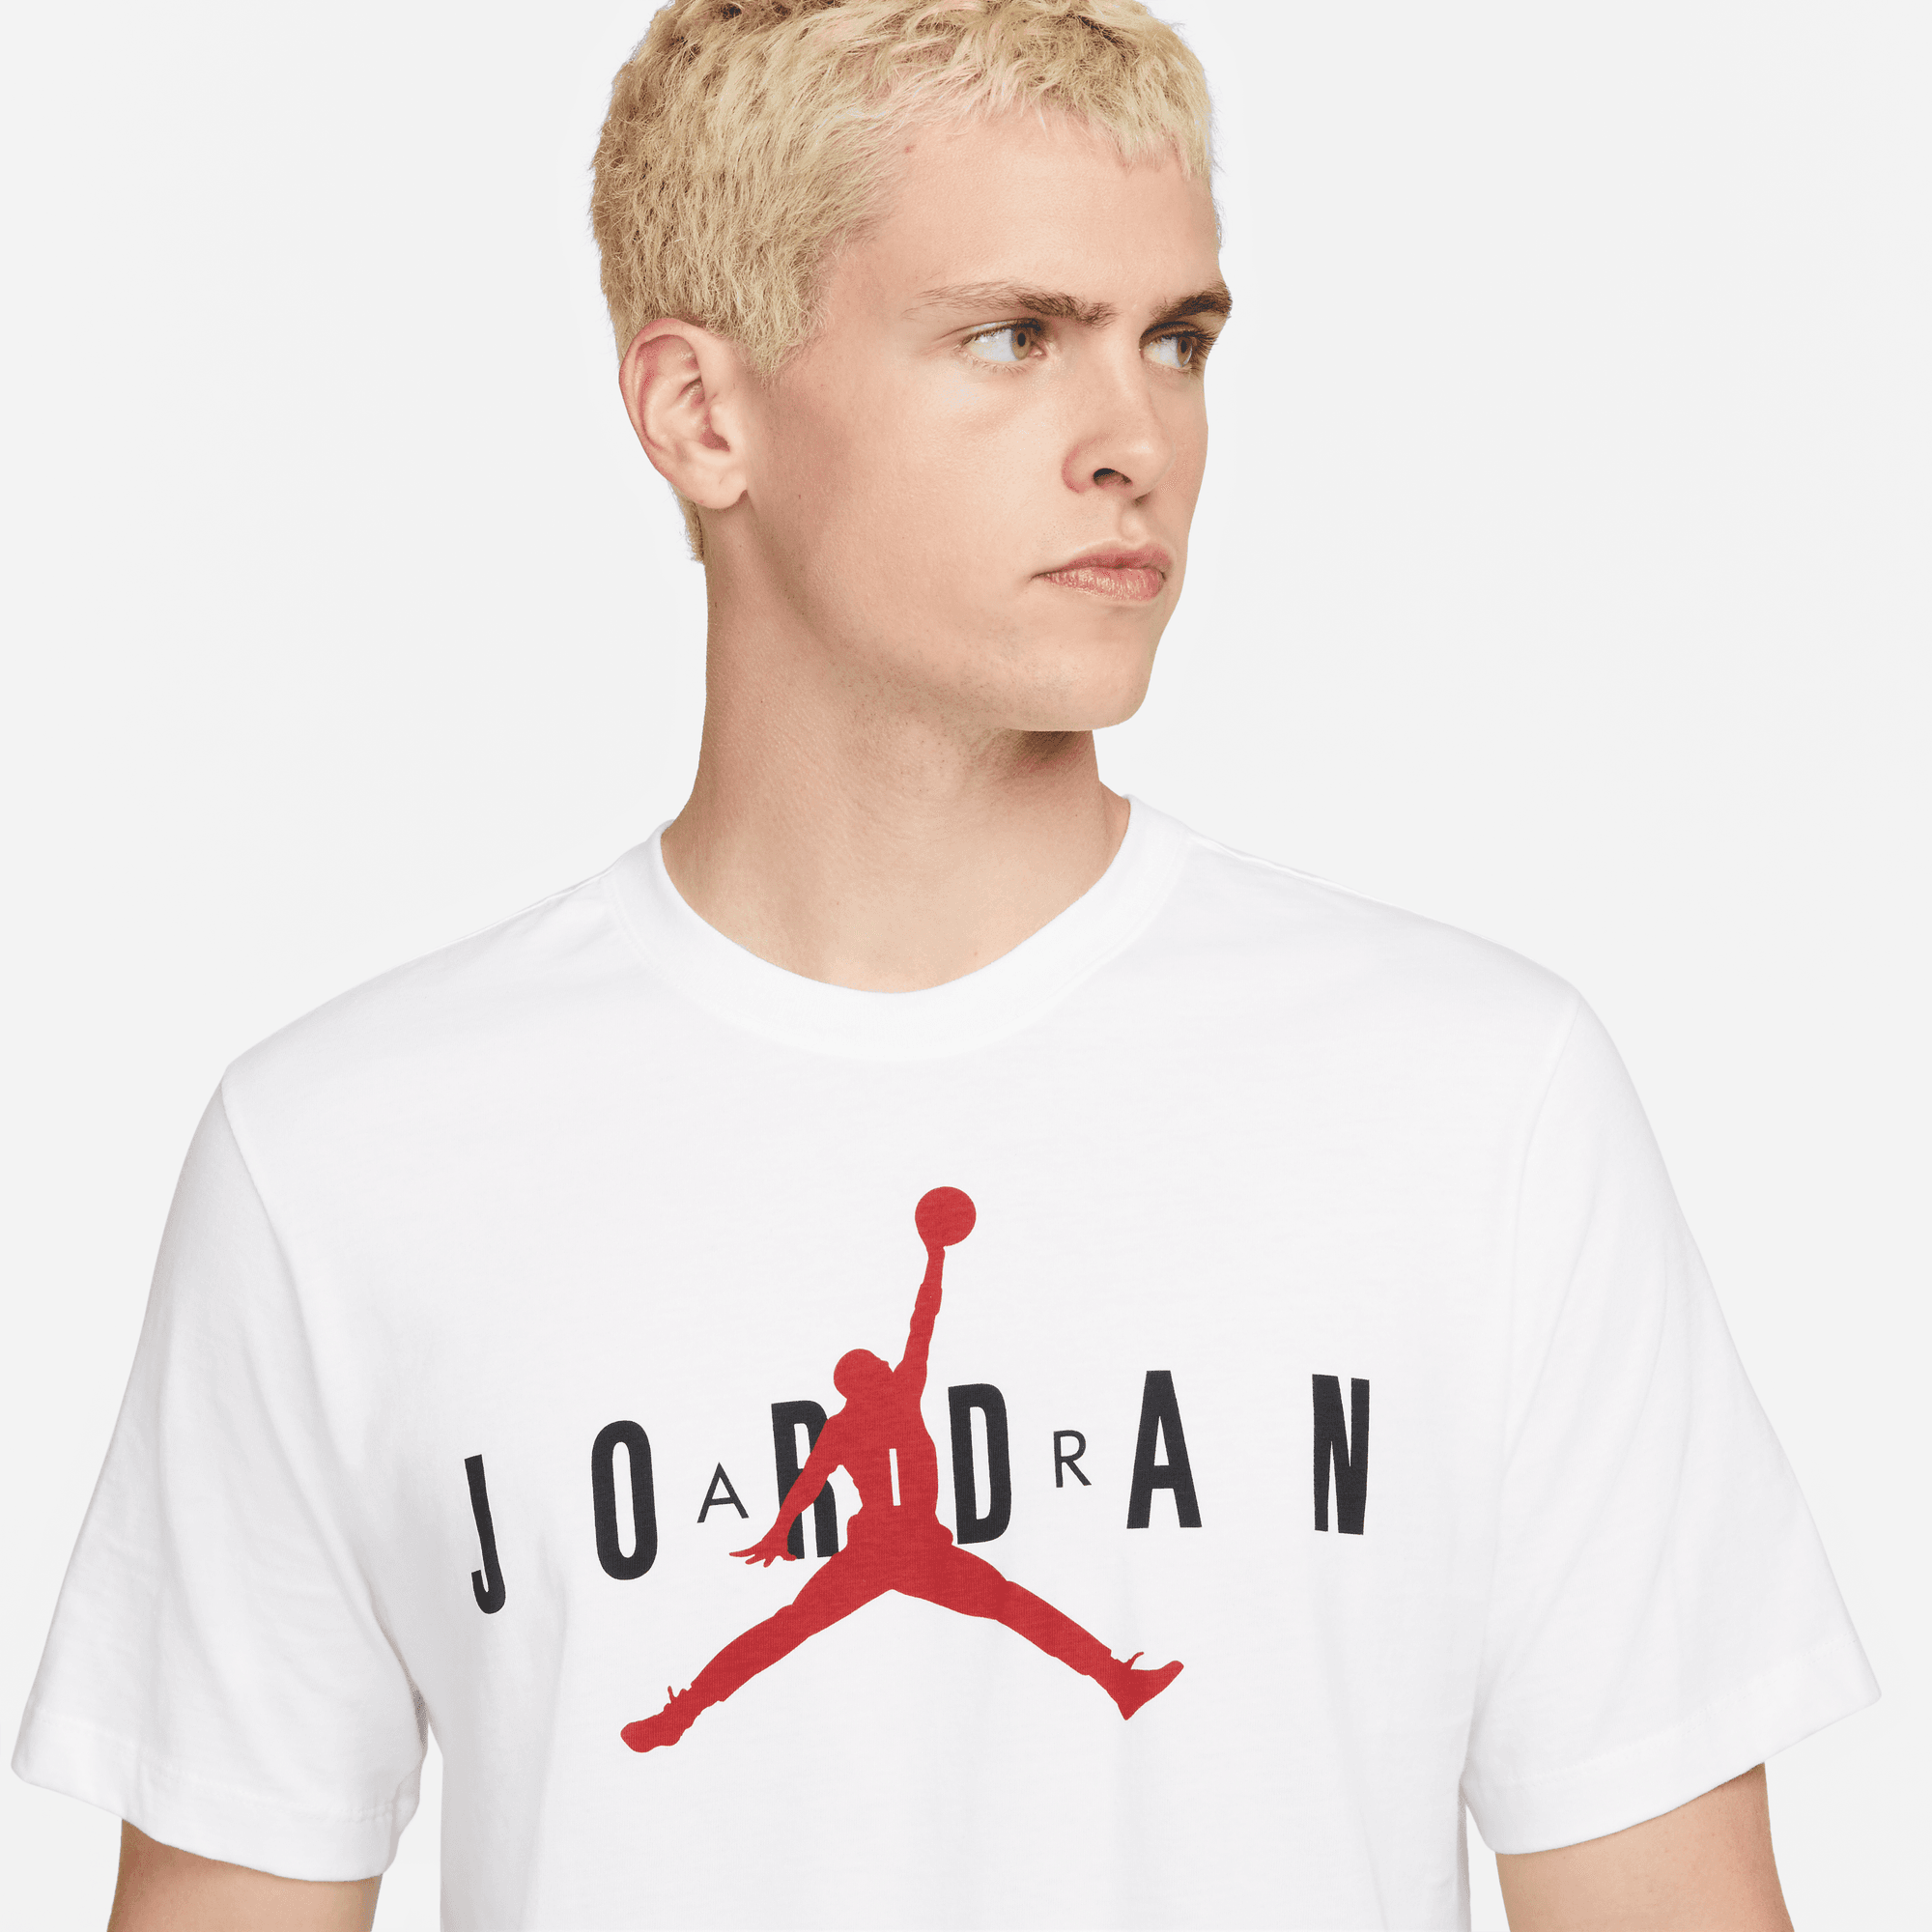 michael jordan t shirt white